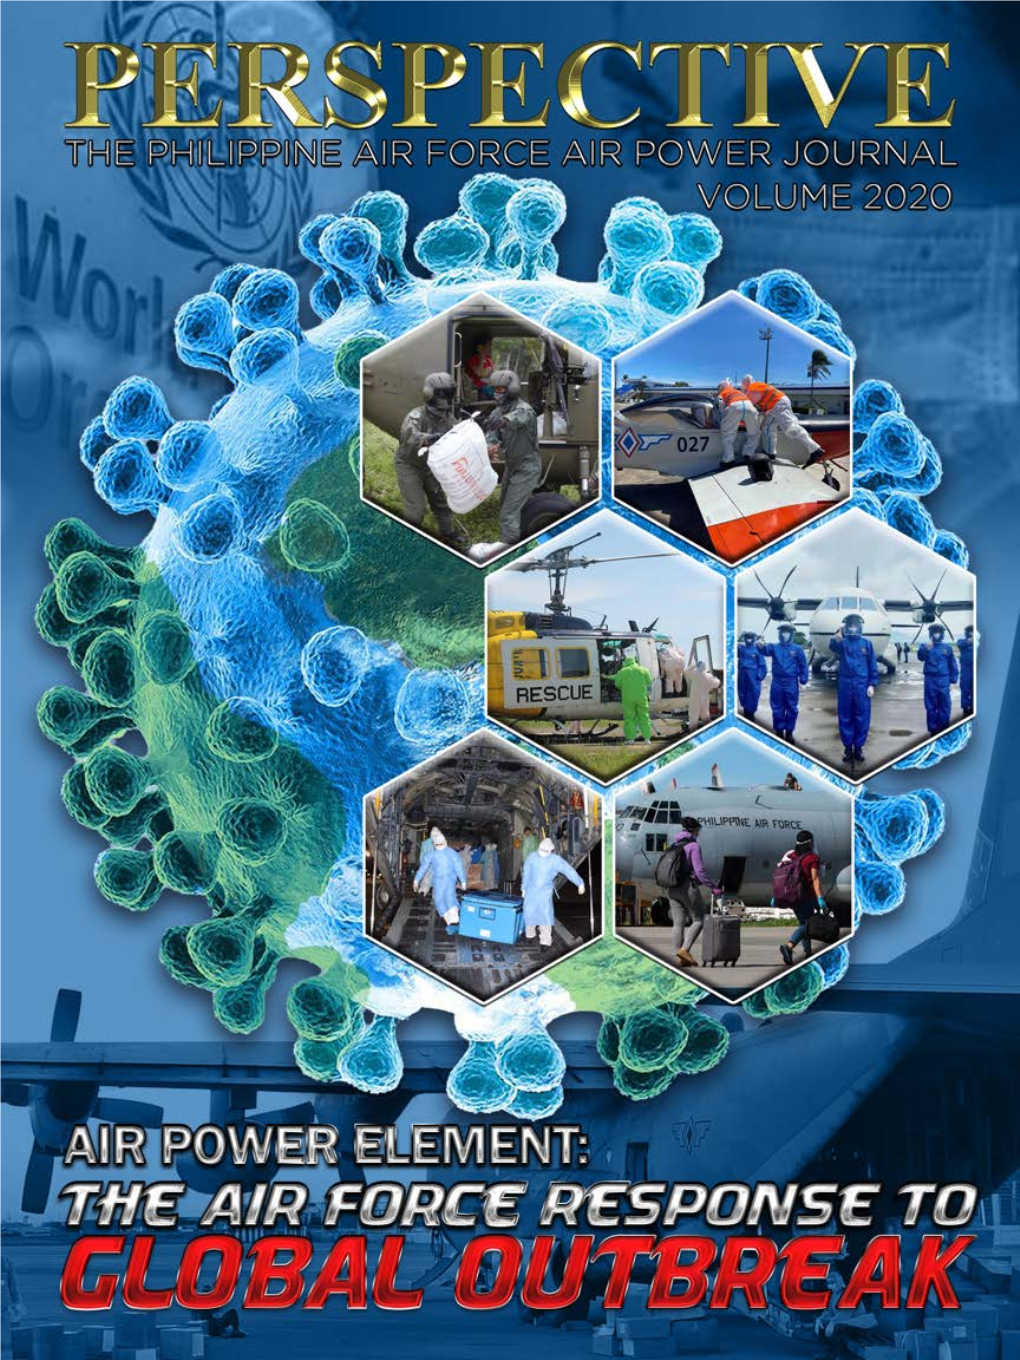 The Philippine Air Force Air Power Journal